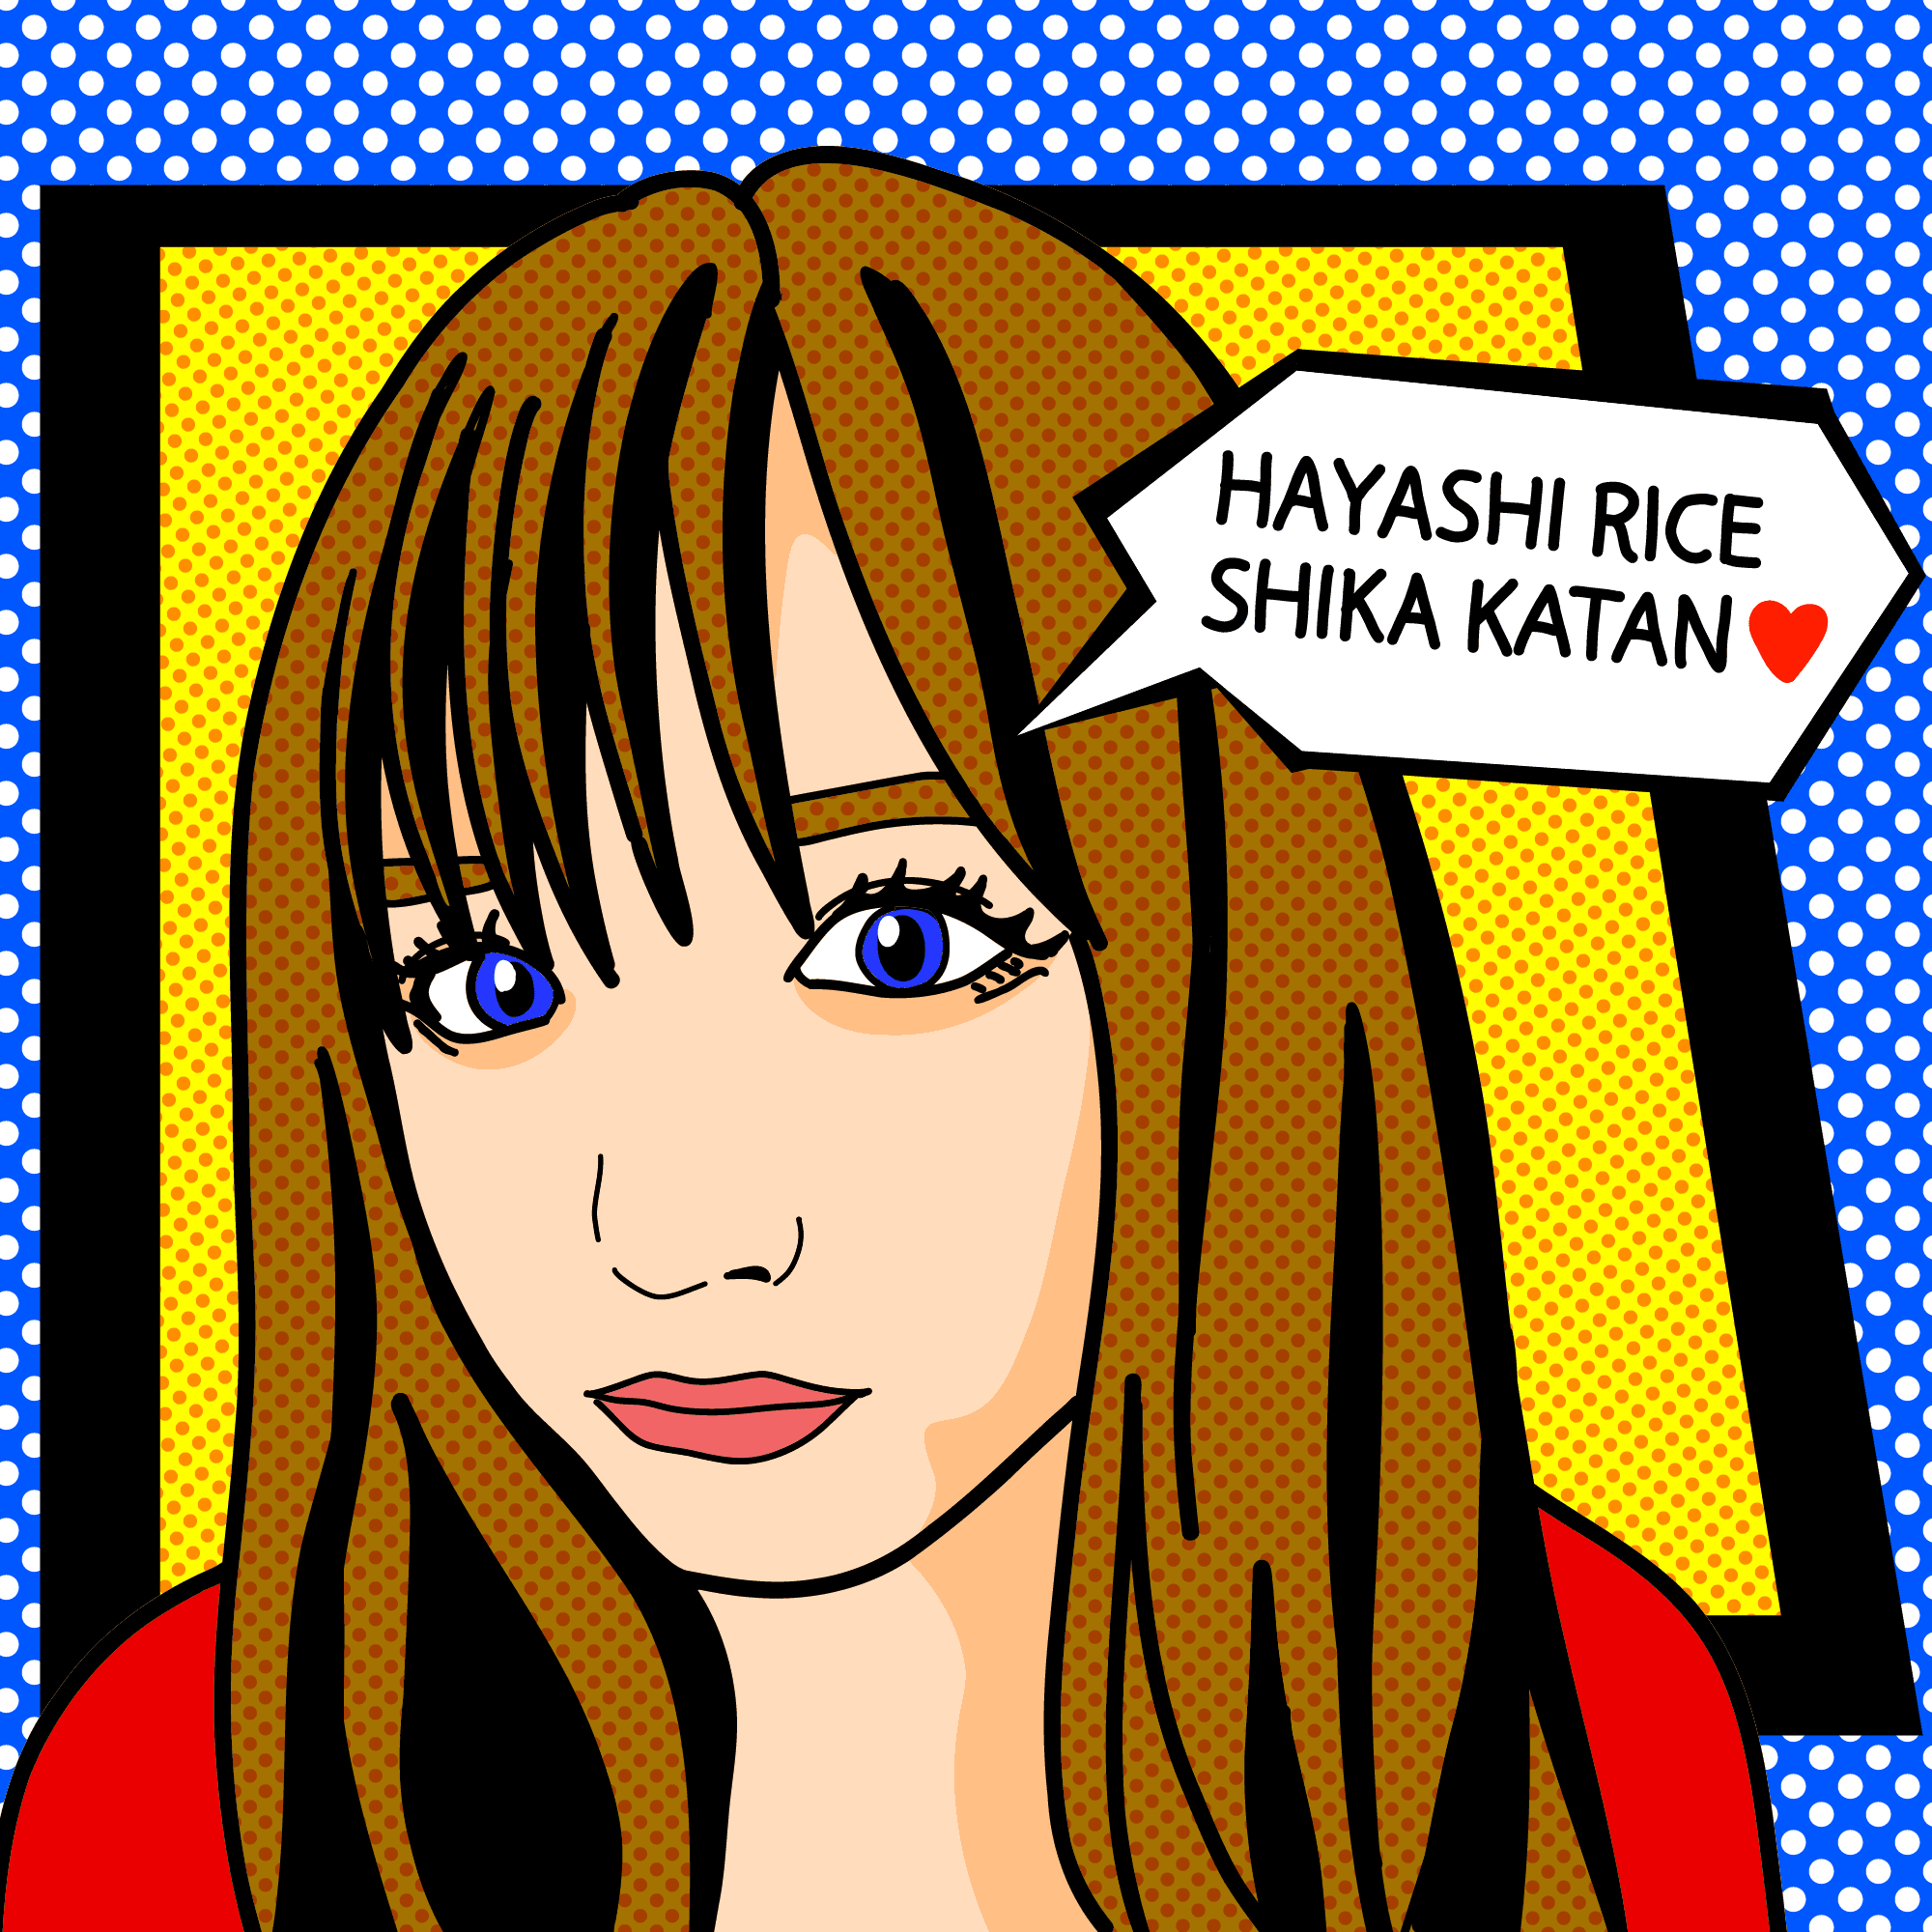 POP ART / HAYASHI RICE SHIKA KATAN